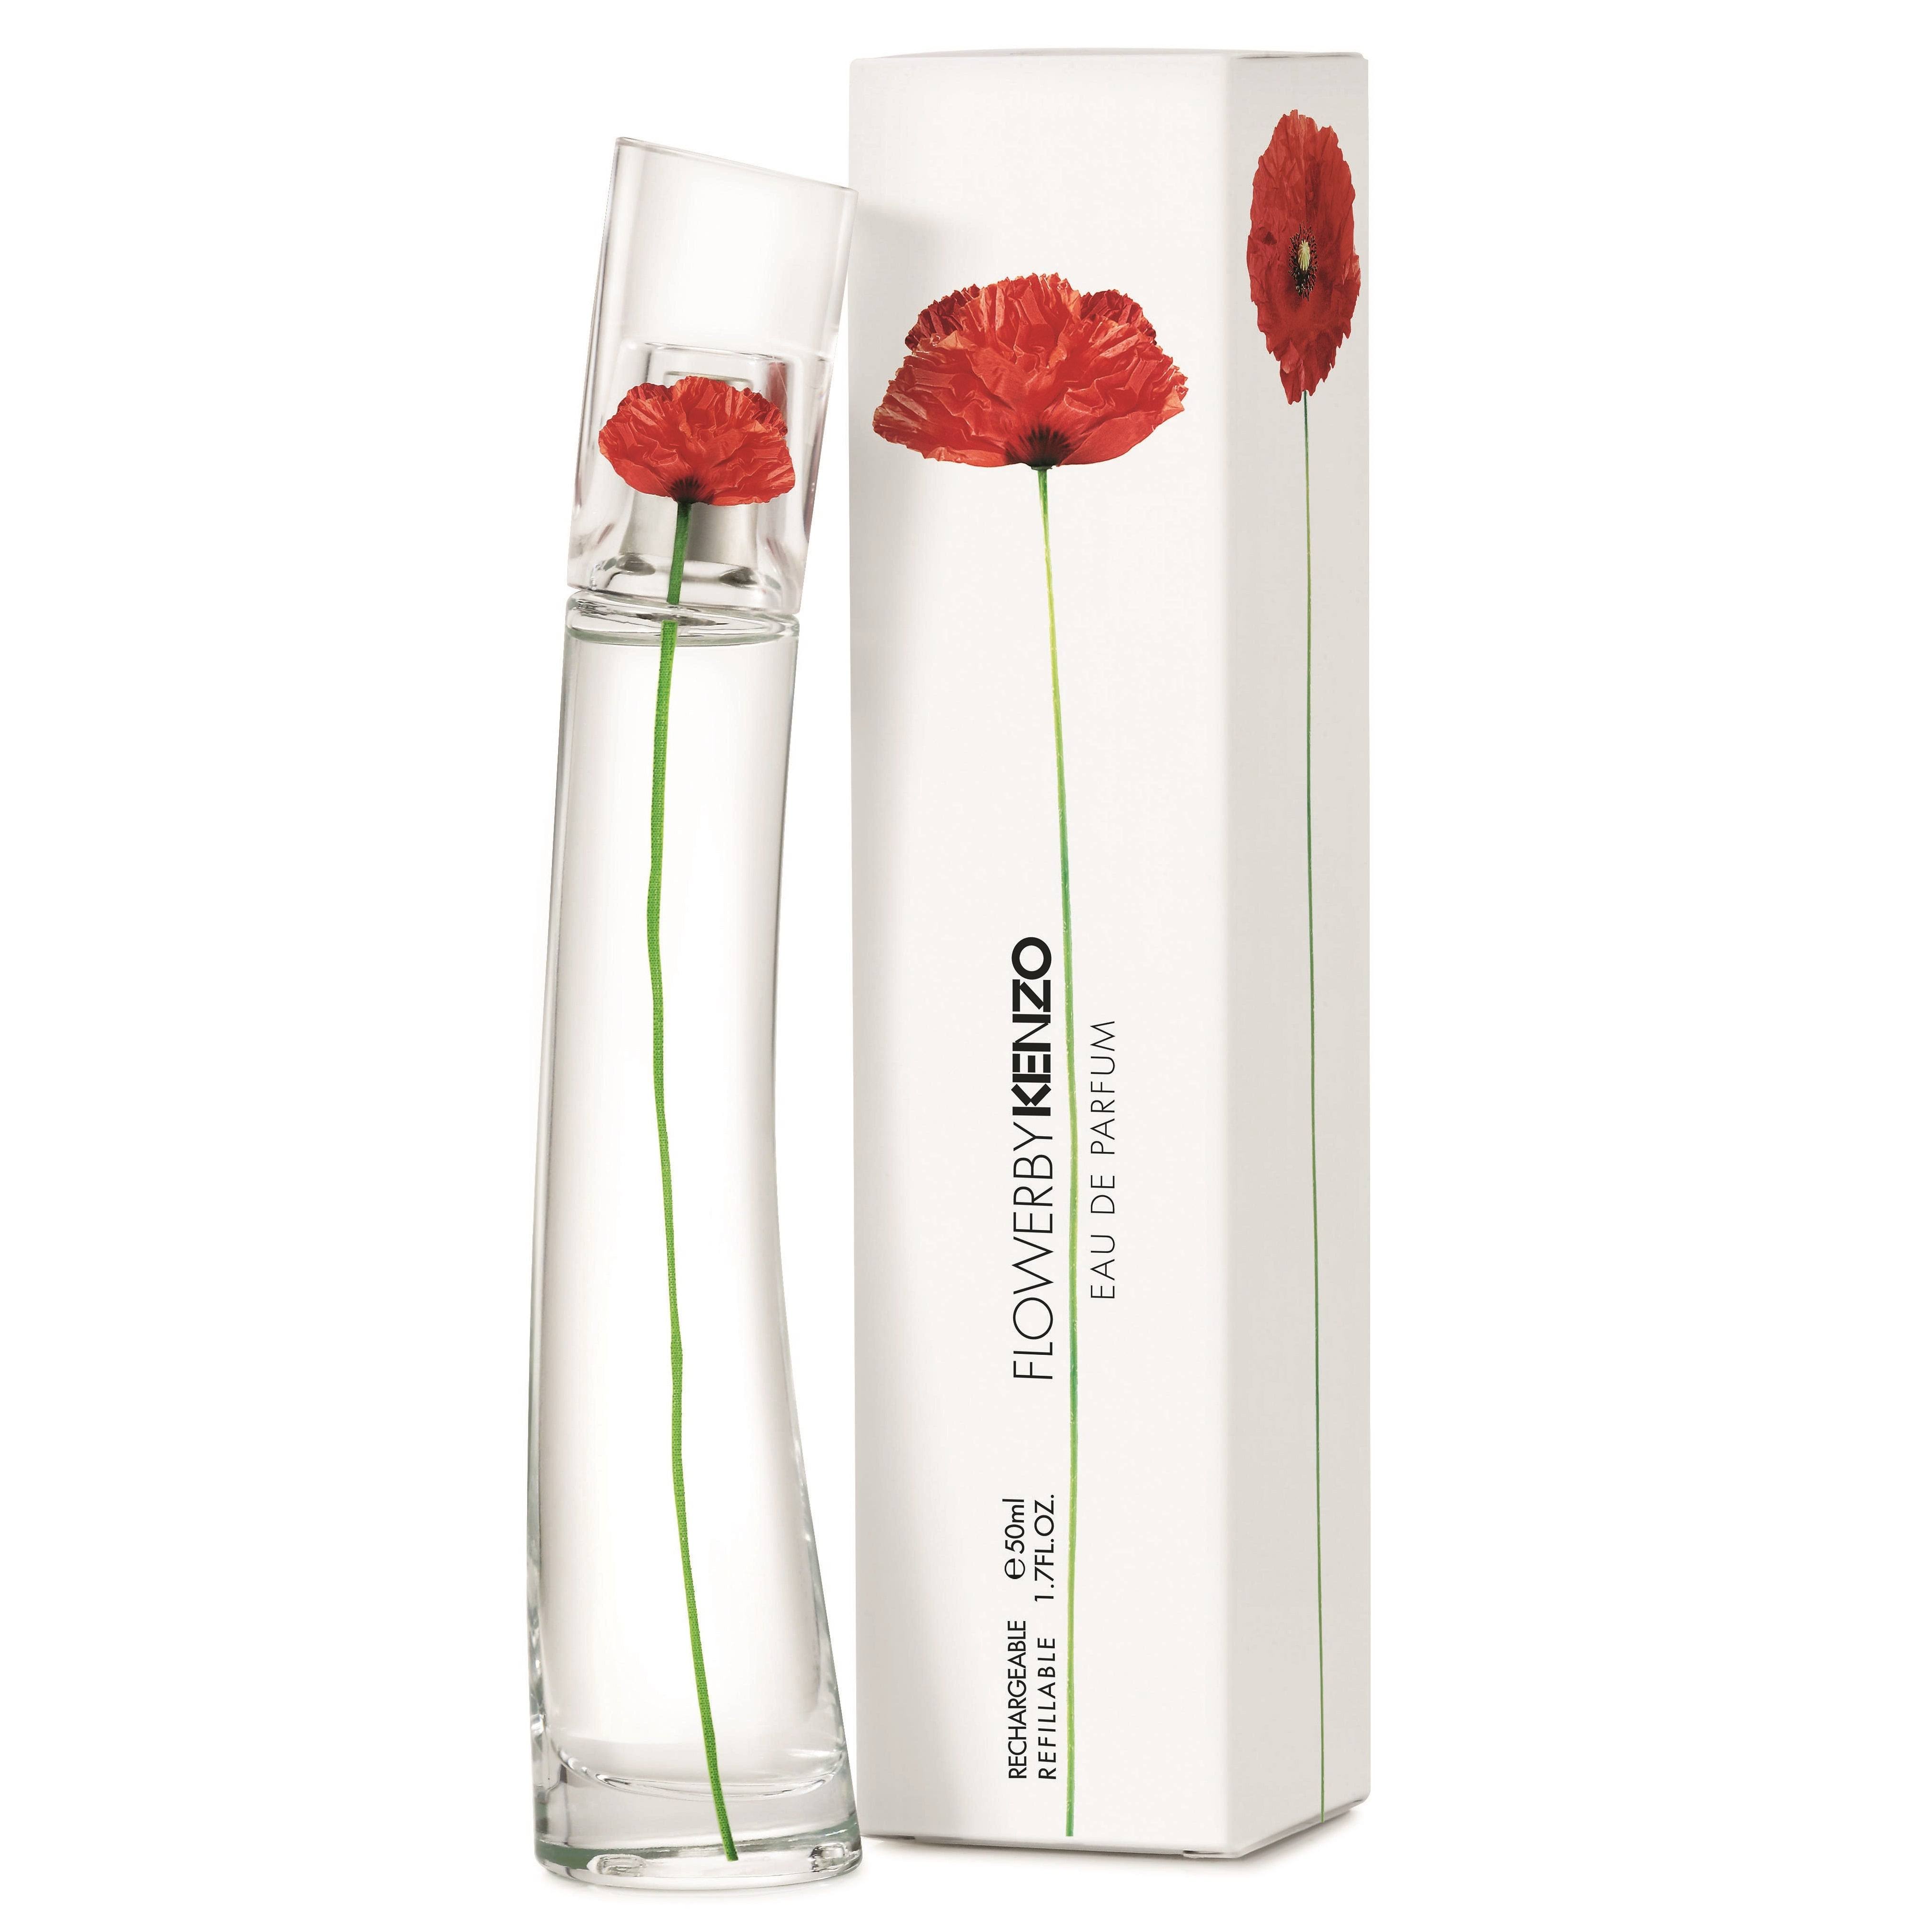 Kenzo Flower for Women Eau de Parfum Spray Refillable - 50ml